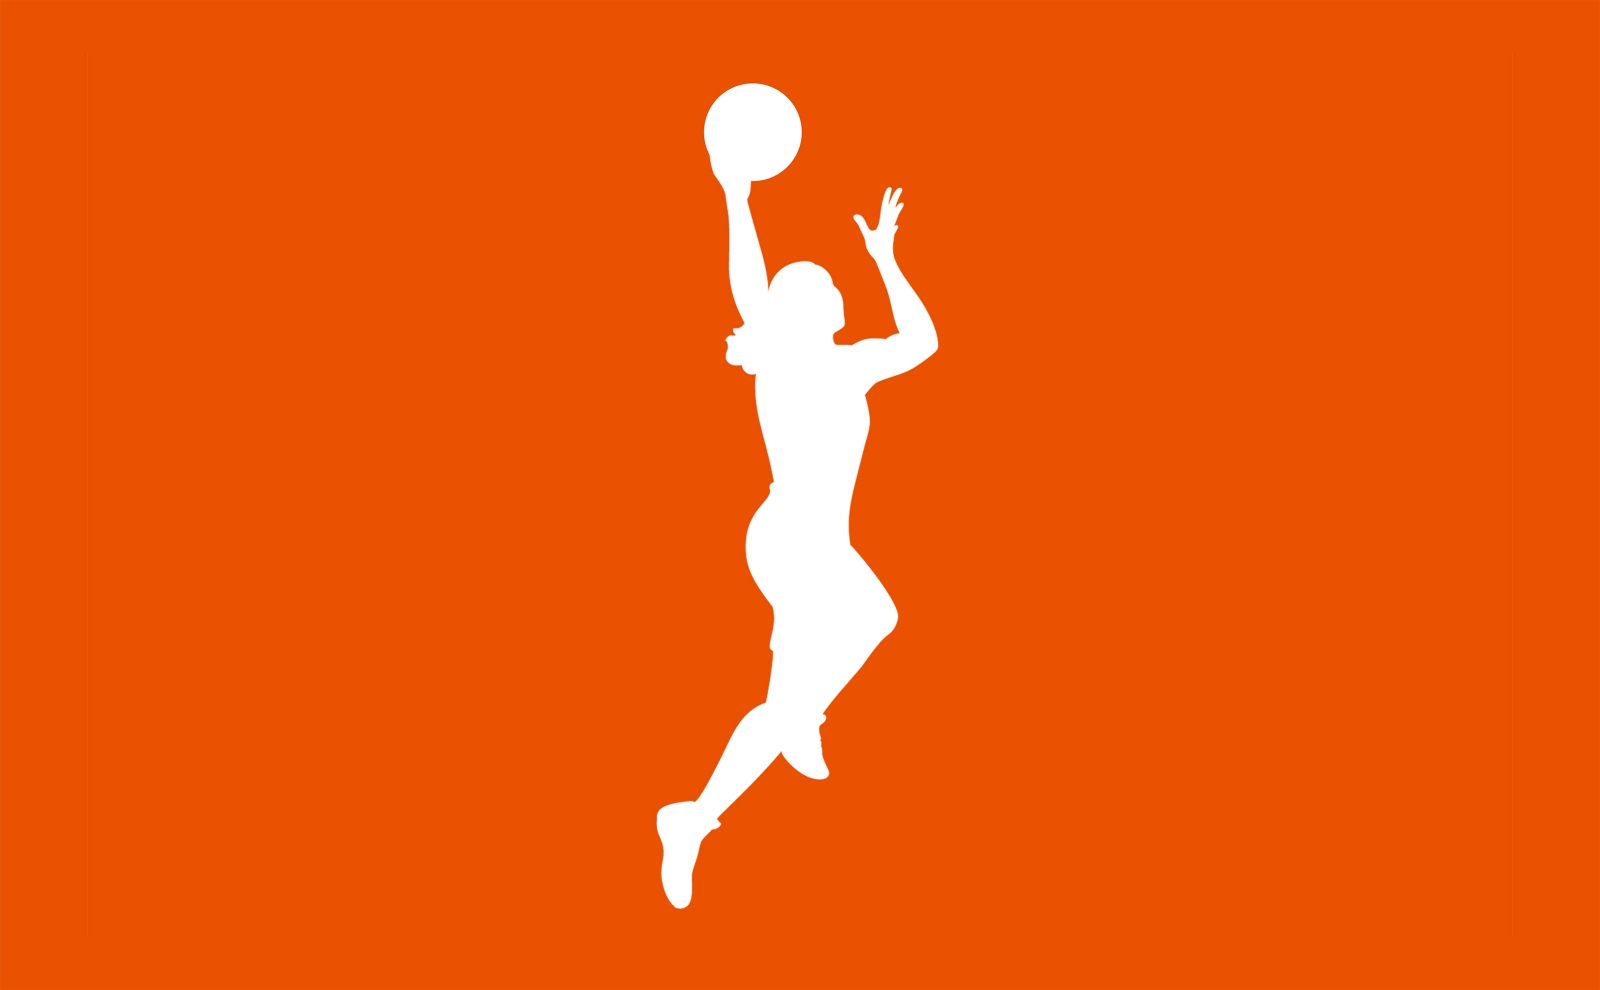 WNBA logo design with jumping woman